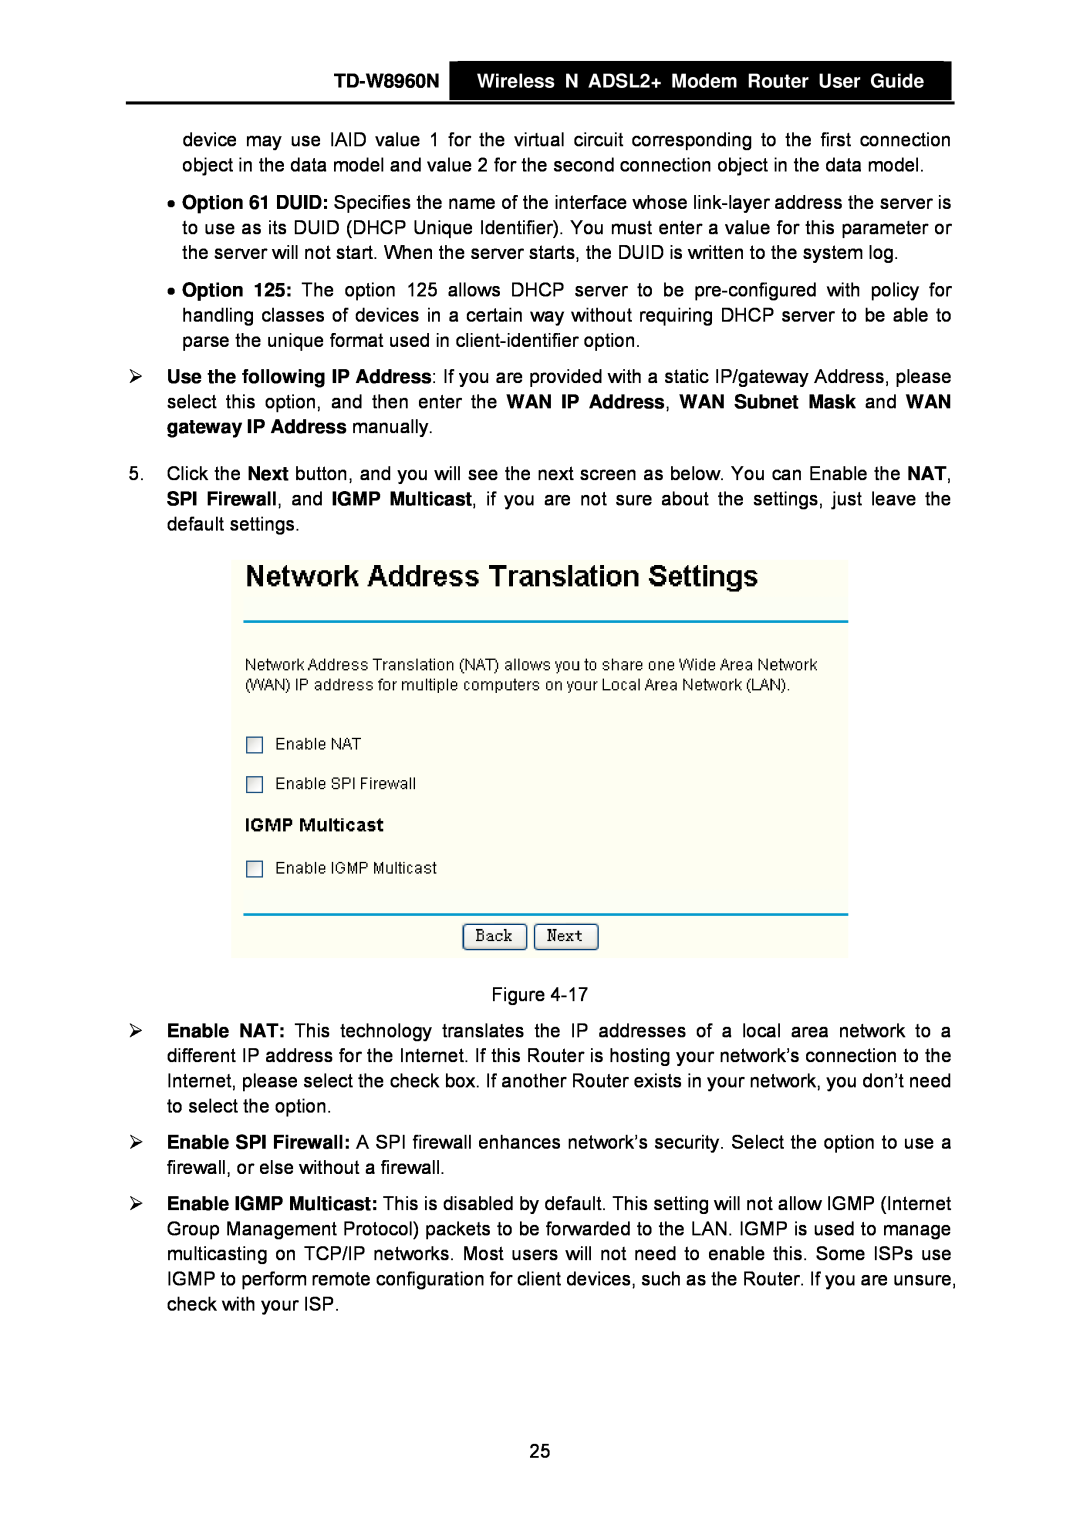 TP-Link manual TD-W8960N Wireless N ADSL2+ Modem Router User Guide 